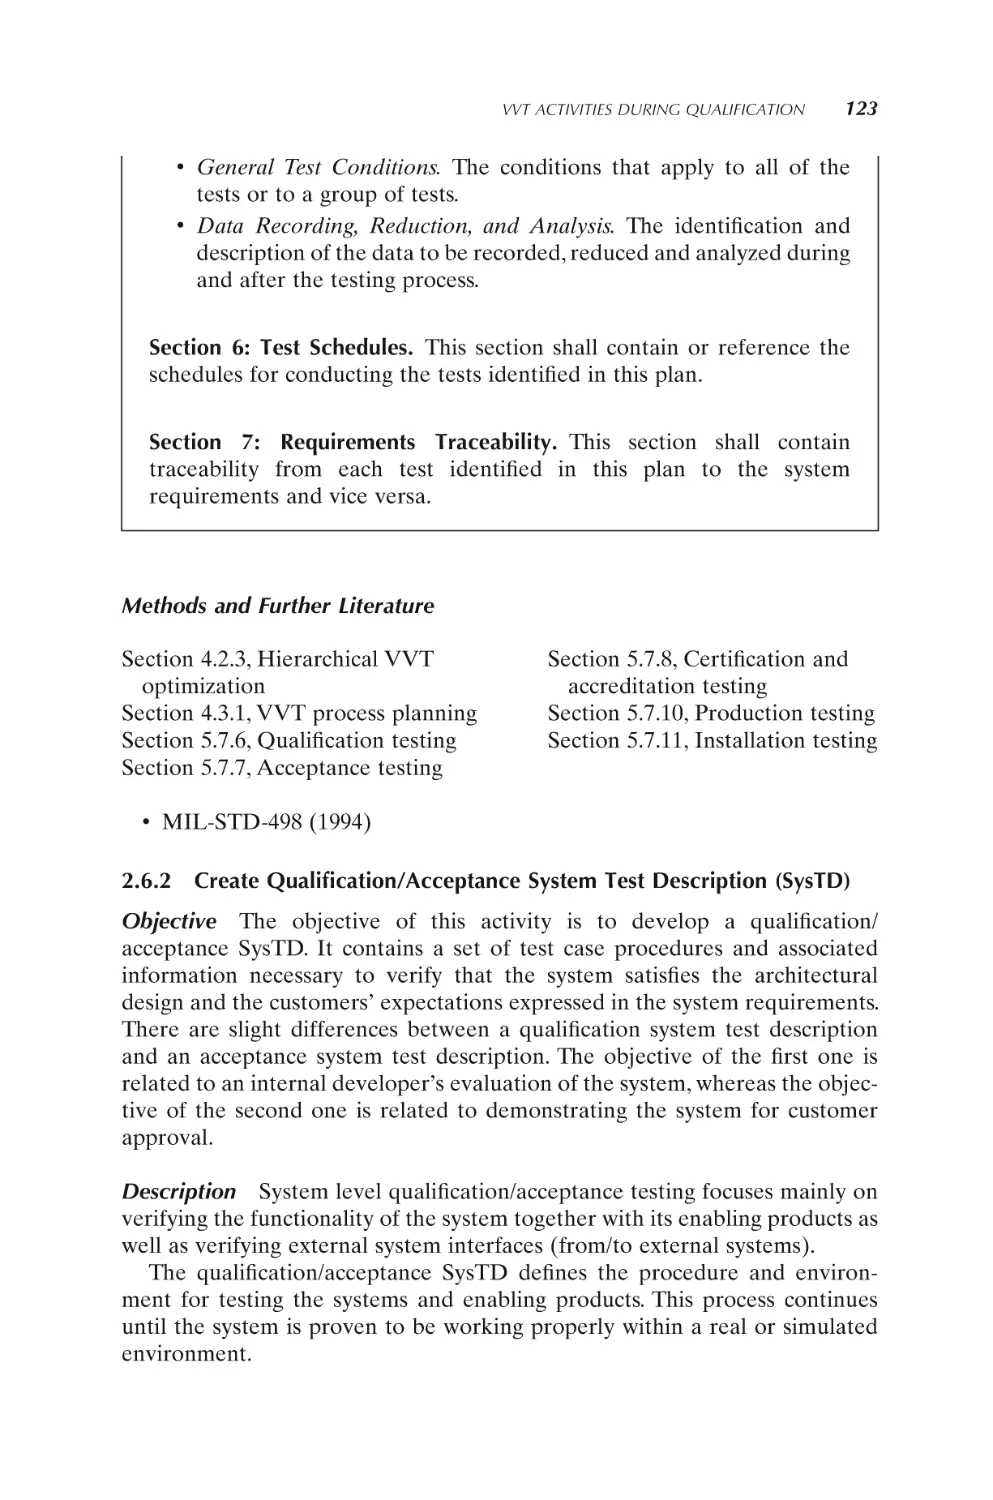 2.6.2 Create Qualification/Acceptance System Test Description (SysTD)